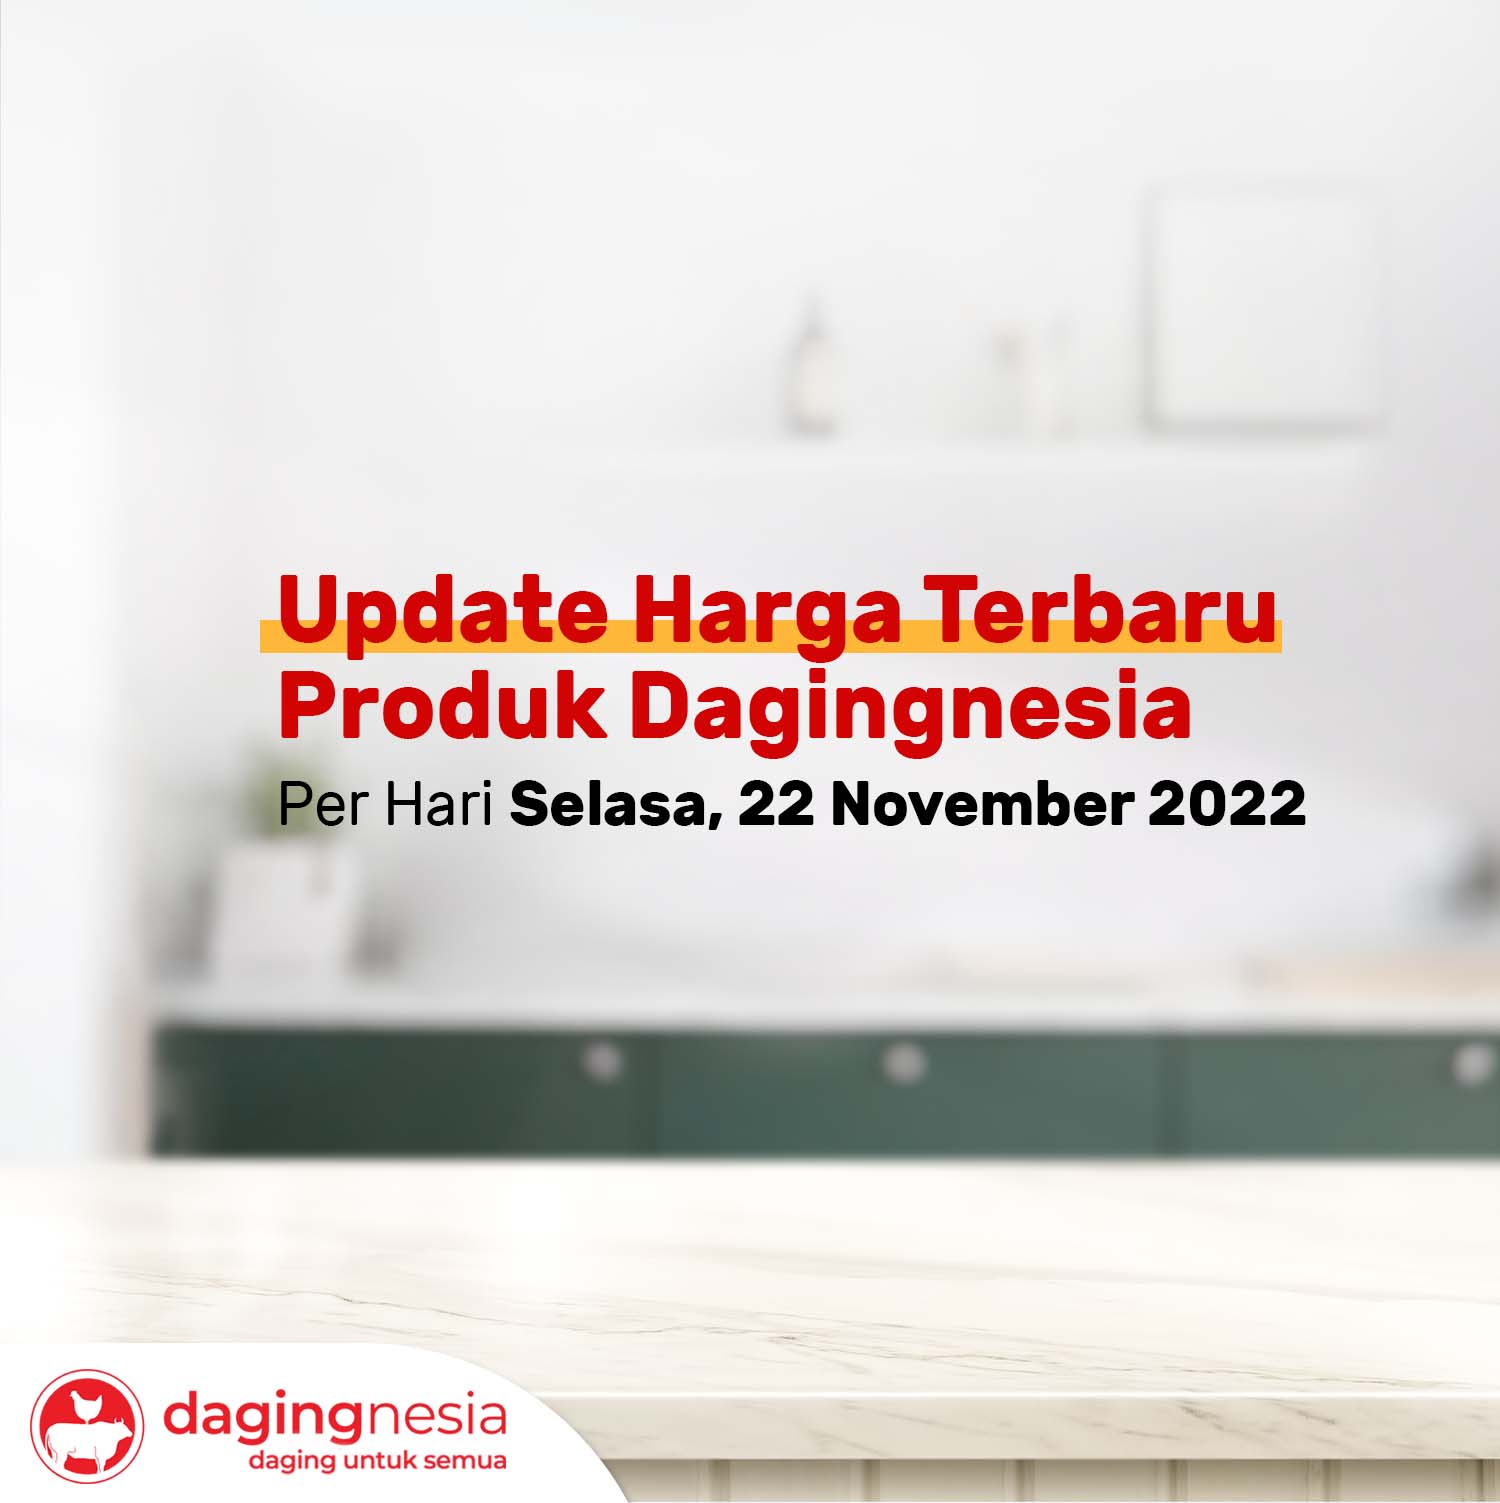 Update Pricelist Dagingnesia – 22 November 2022